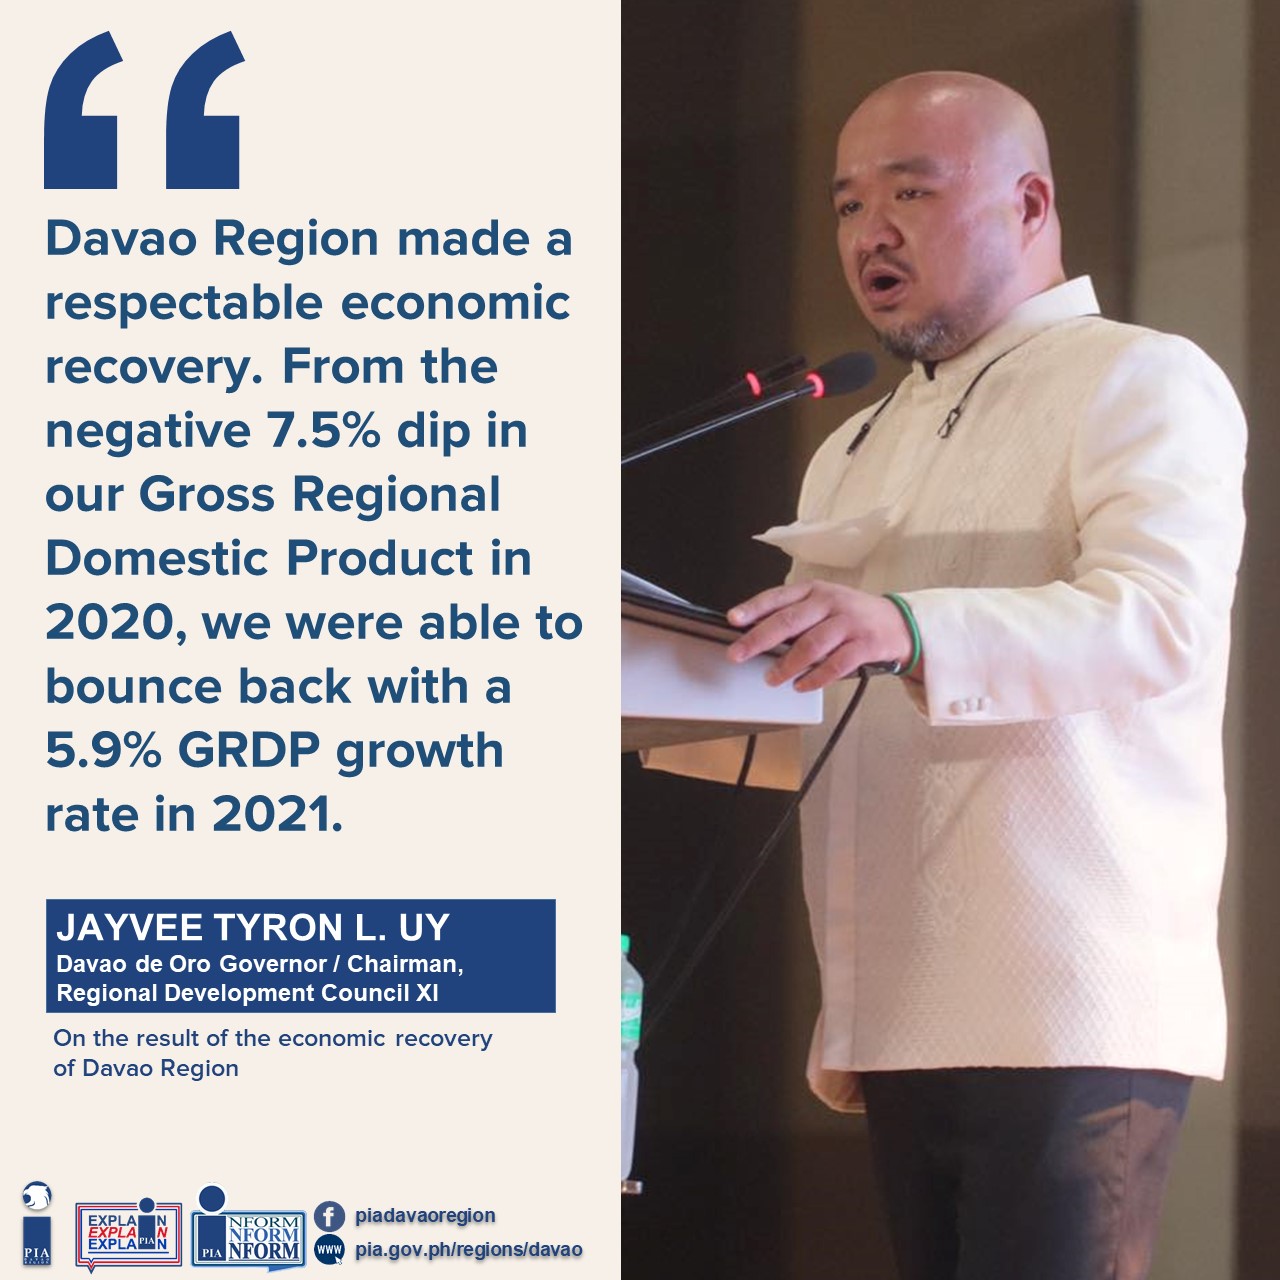 Economy of Davao region